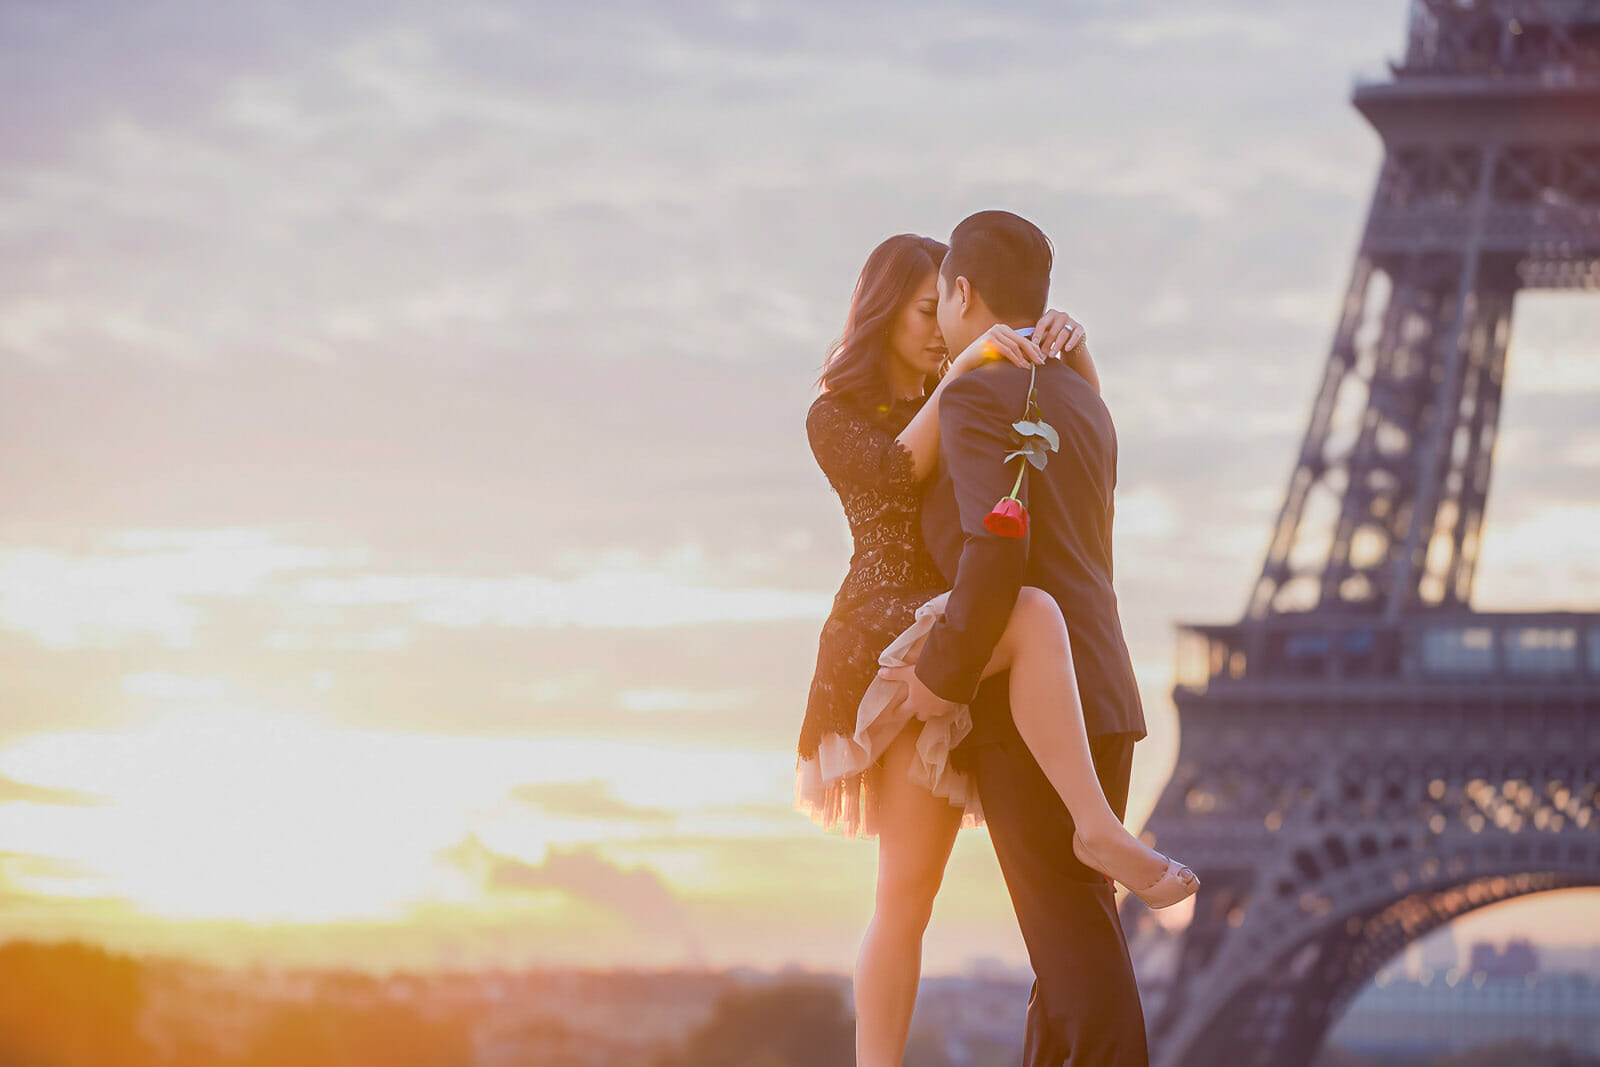 Romantic Eiffel Tower couple photos at Trocadero Paris